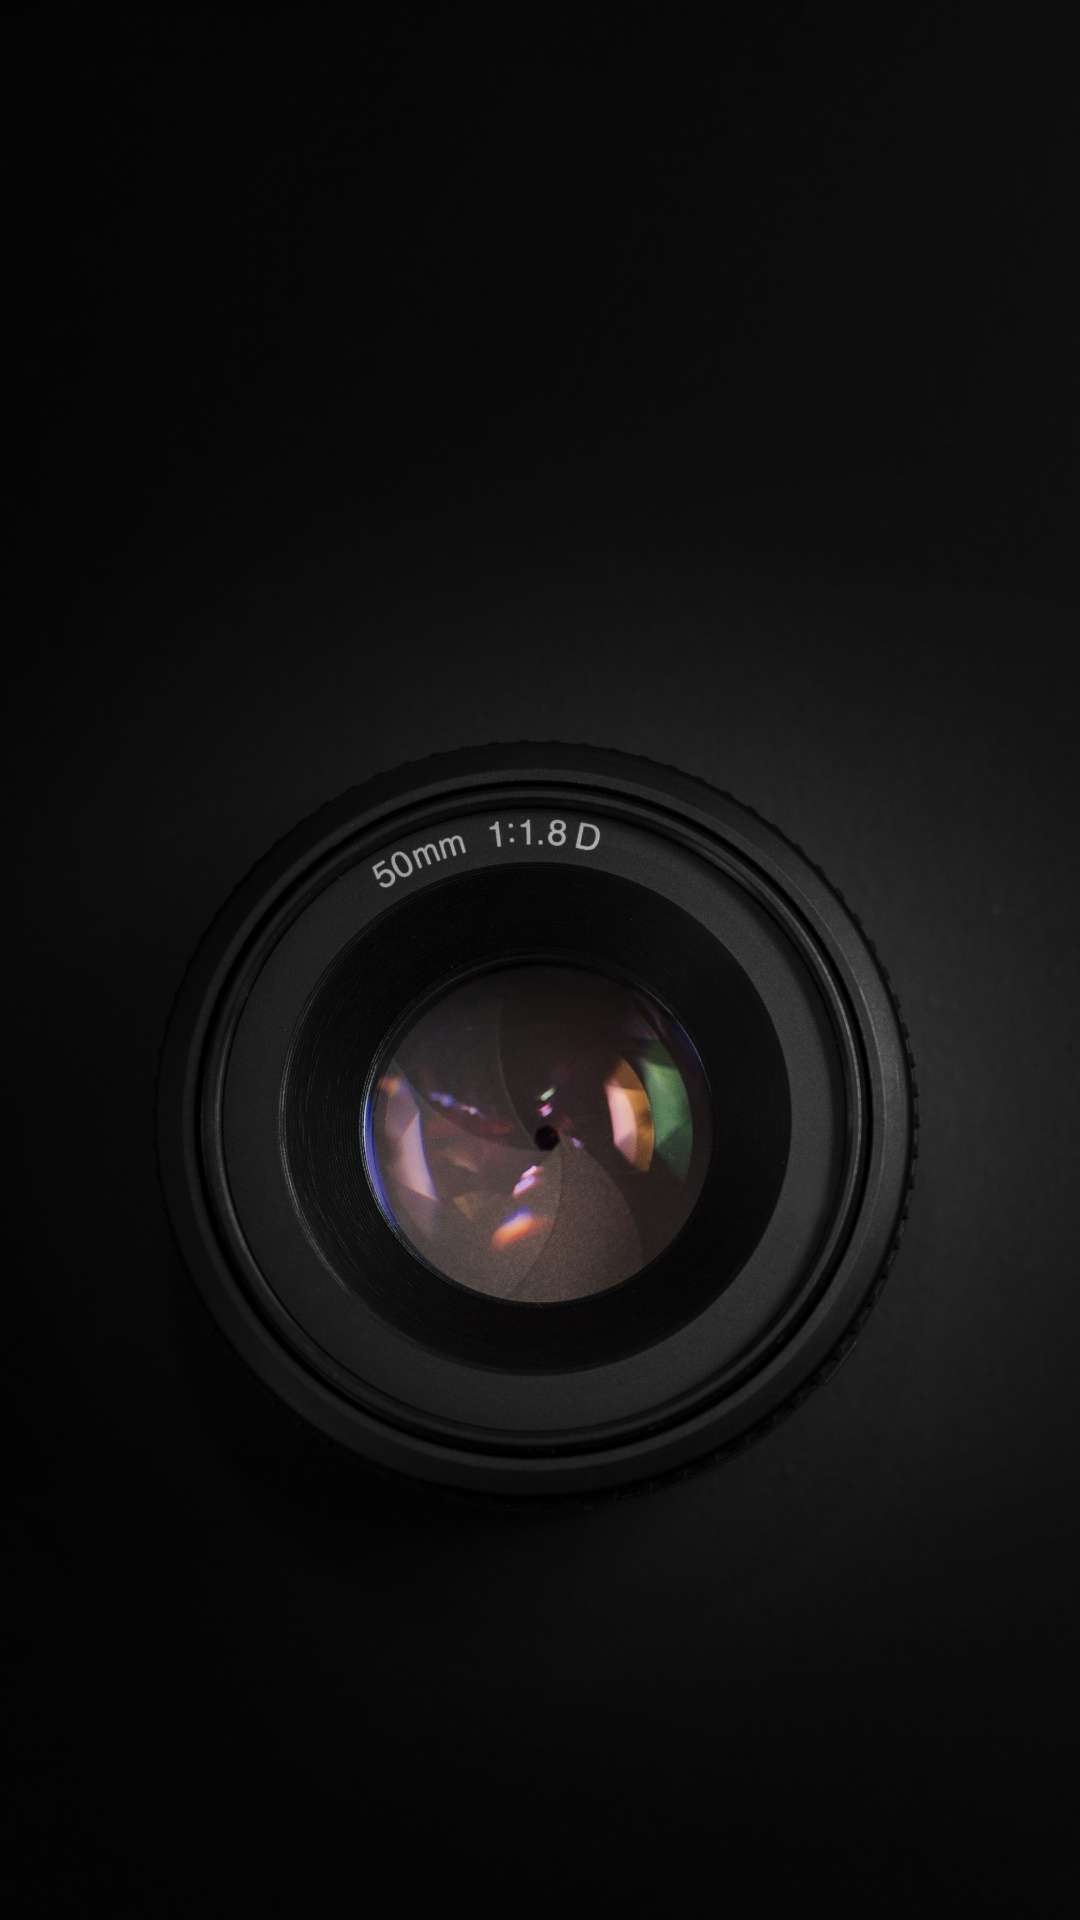 Black Camera Lens on Black Surface. Wallpaper in 1080x1920 Resolution